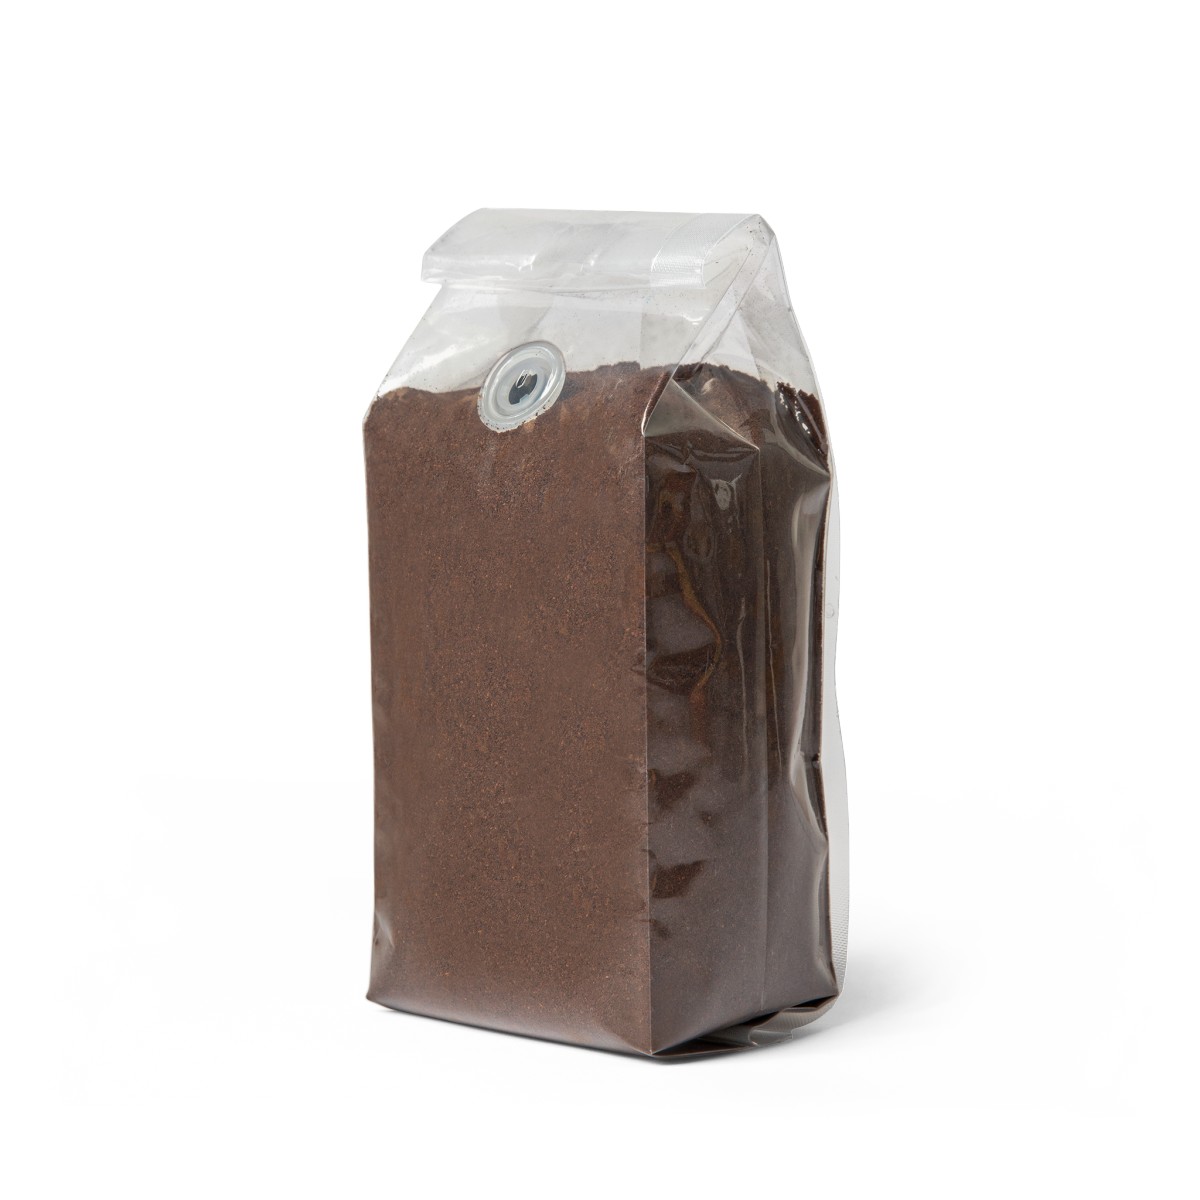 Trapper Peak Decaf Coffee Blend (Medium Roast) product thumbnail image